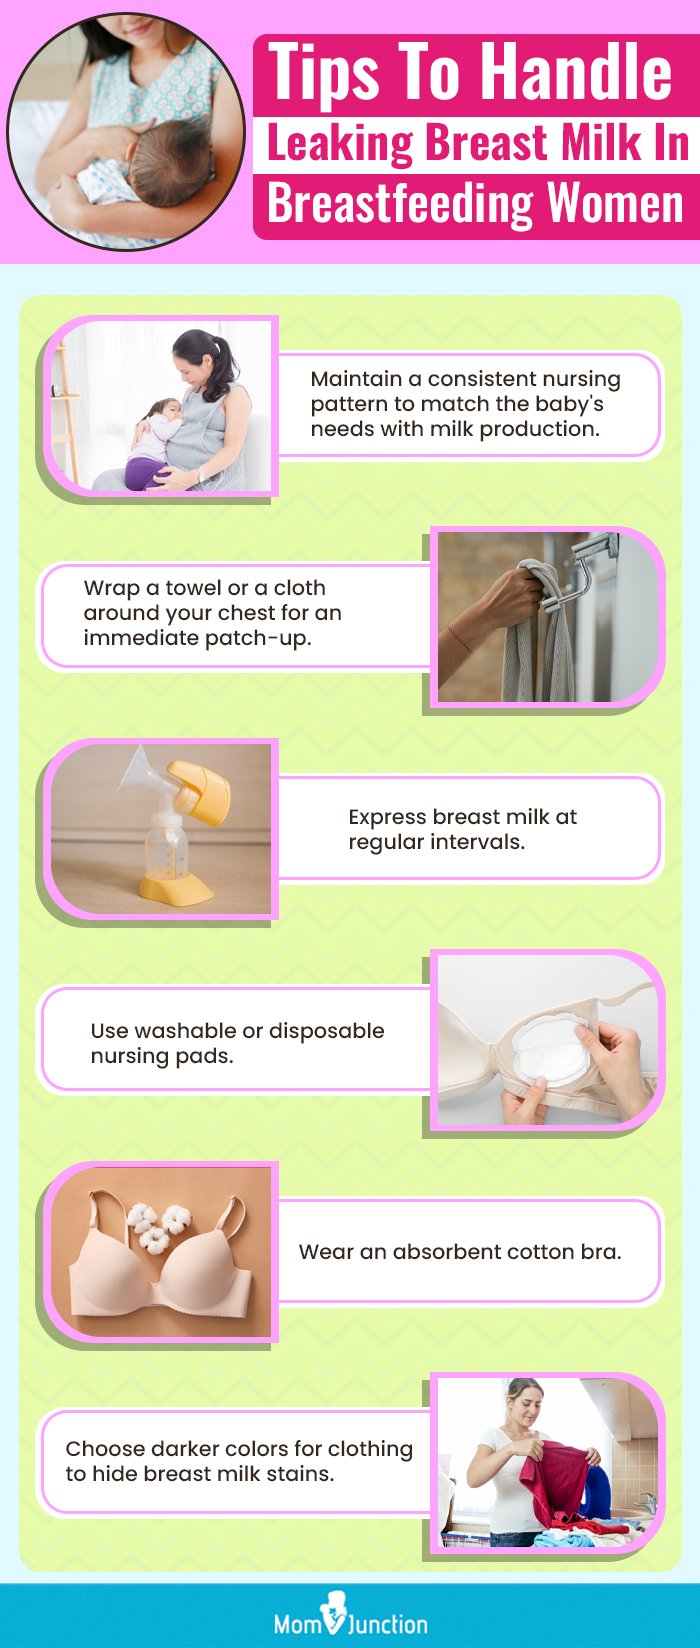 tips to handle leaking breast milk in breastfeeding women (infographic)